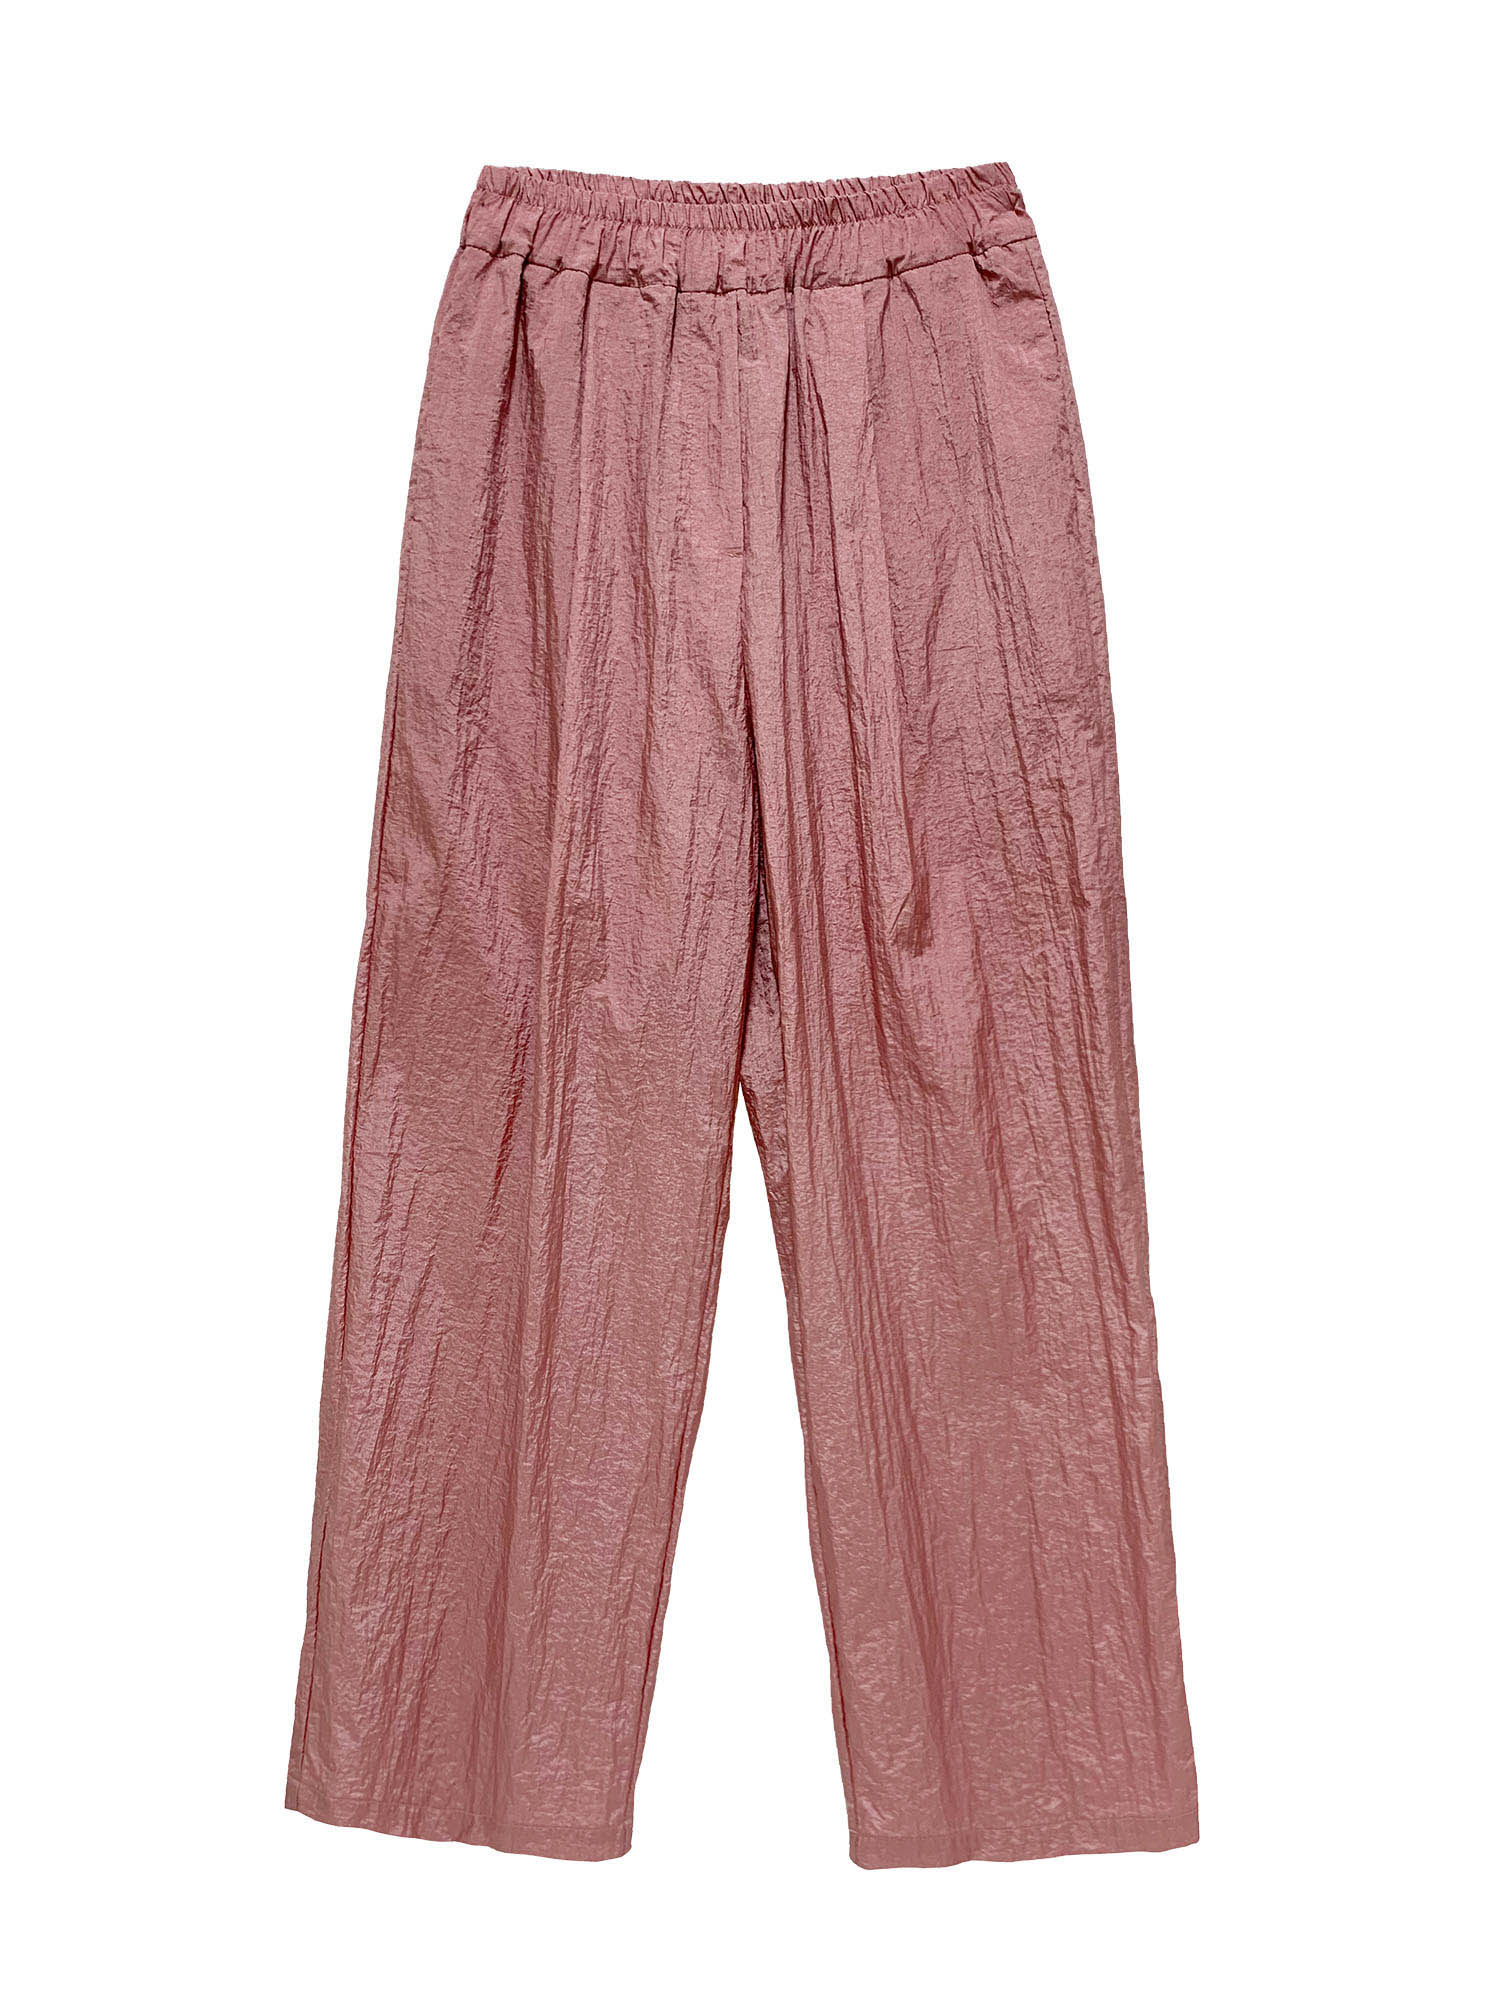 Crunch Pants - Pink